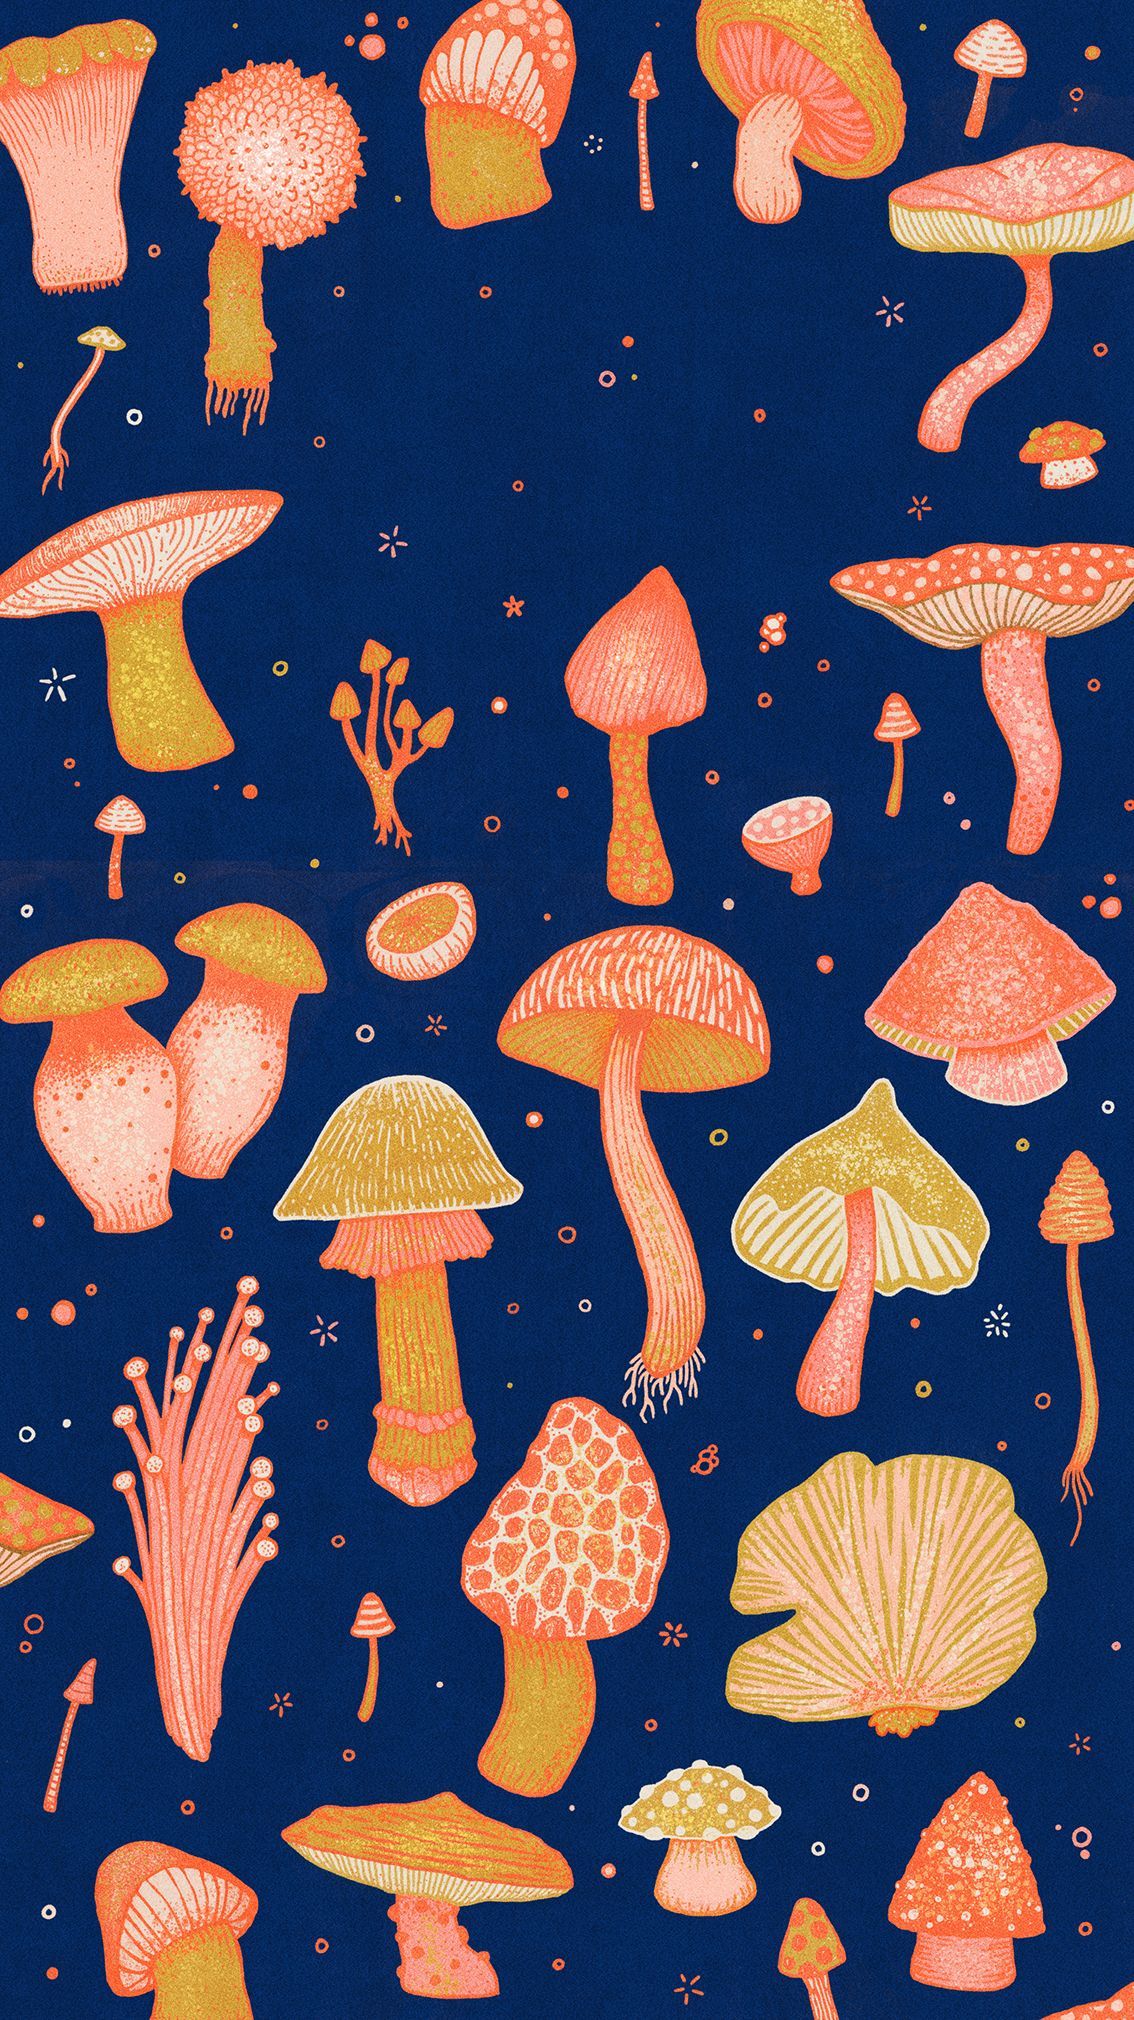 Wallpaper. Hippie wallpaper, Mushroom wallpaper, iPhone background wallpaper